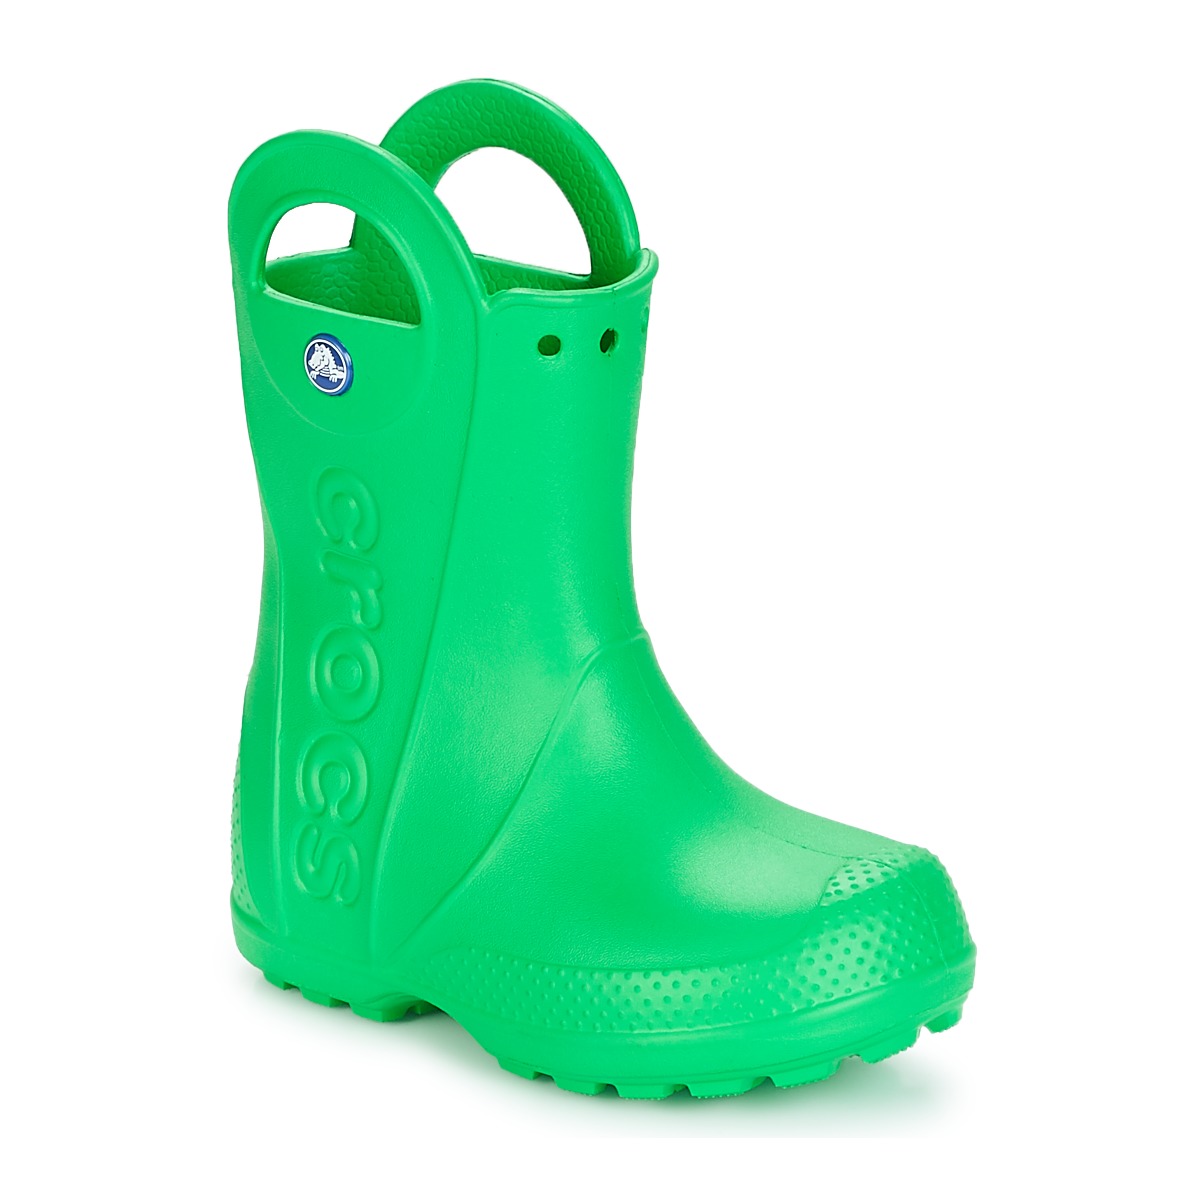 鞋子 儿童 雨靴 crocs 卡骆驰 HANDLE IT RAIN BOOT KIDS 绿色